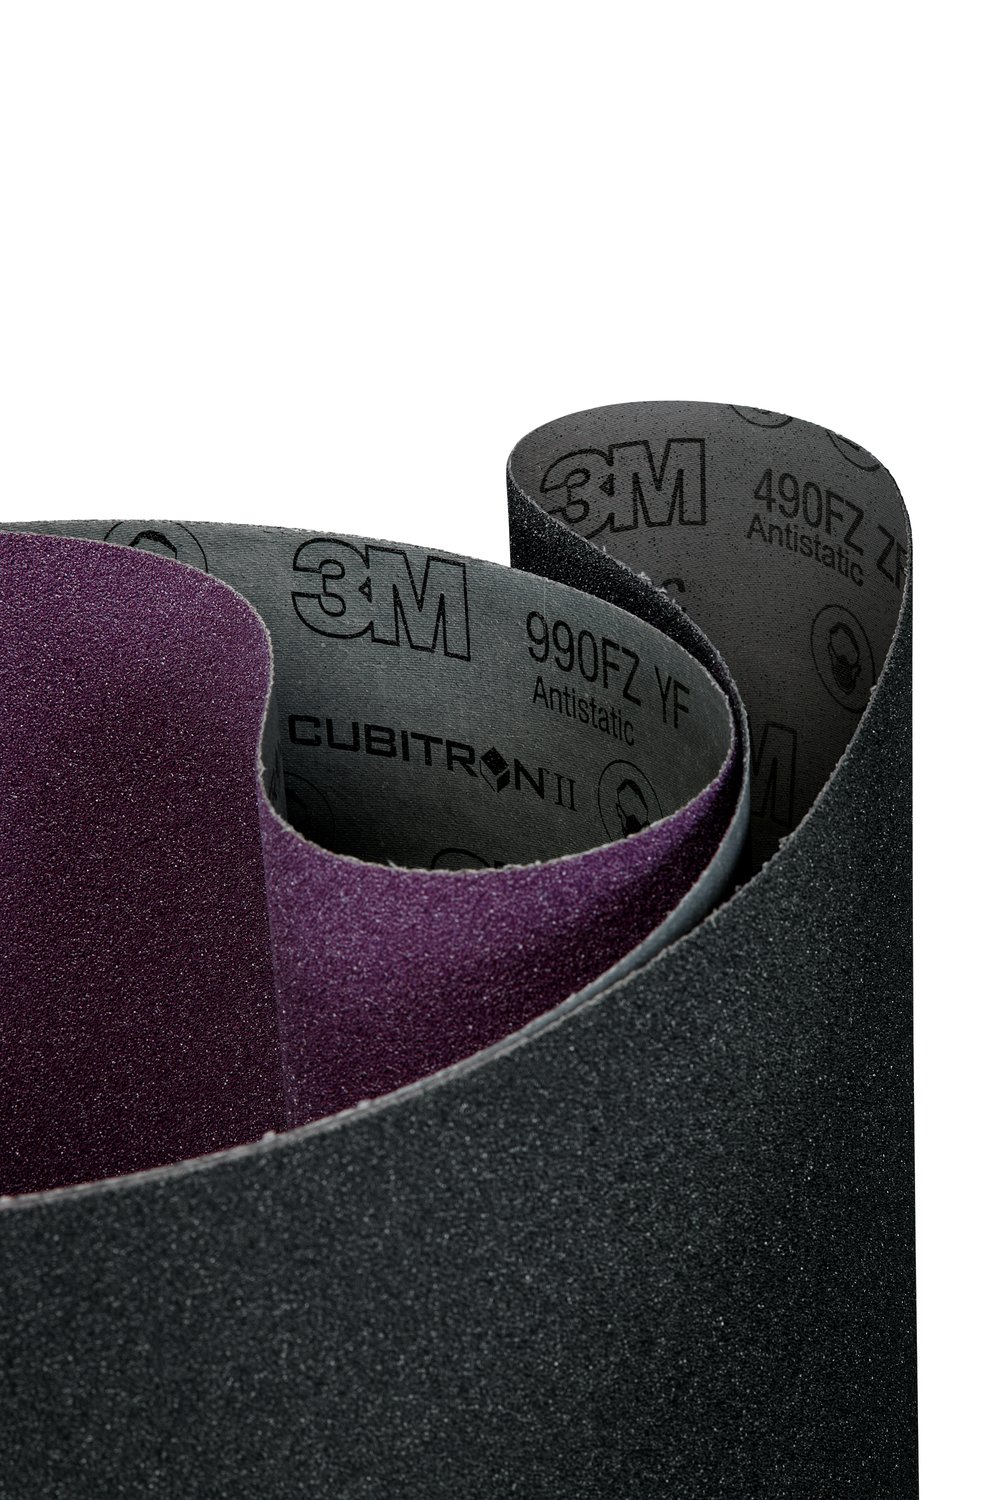 7010513541 - 3M SiC Cloth Belt 490FZ, P40 ZF-weight, 4 in x 54 in, Film-lok,
Single-flex